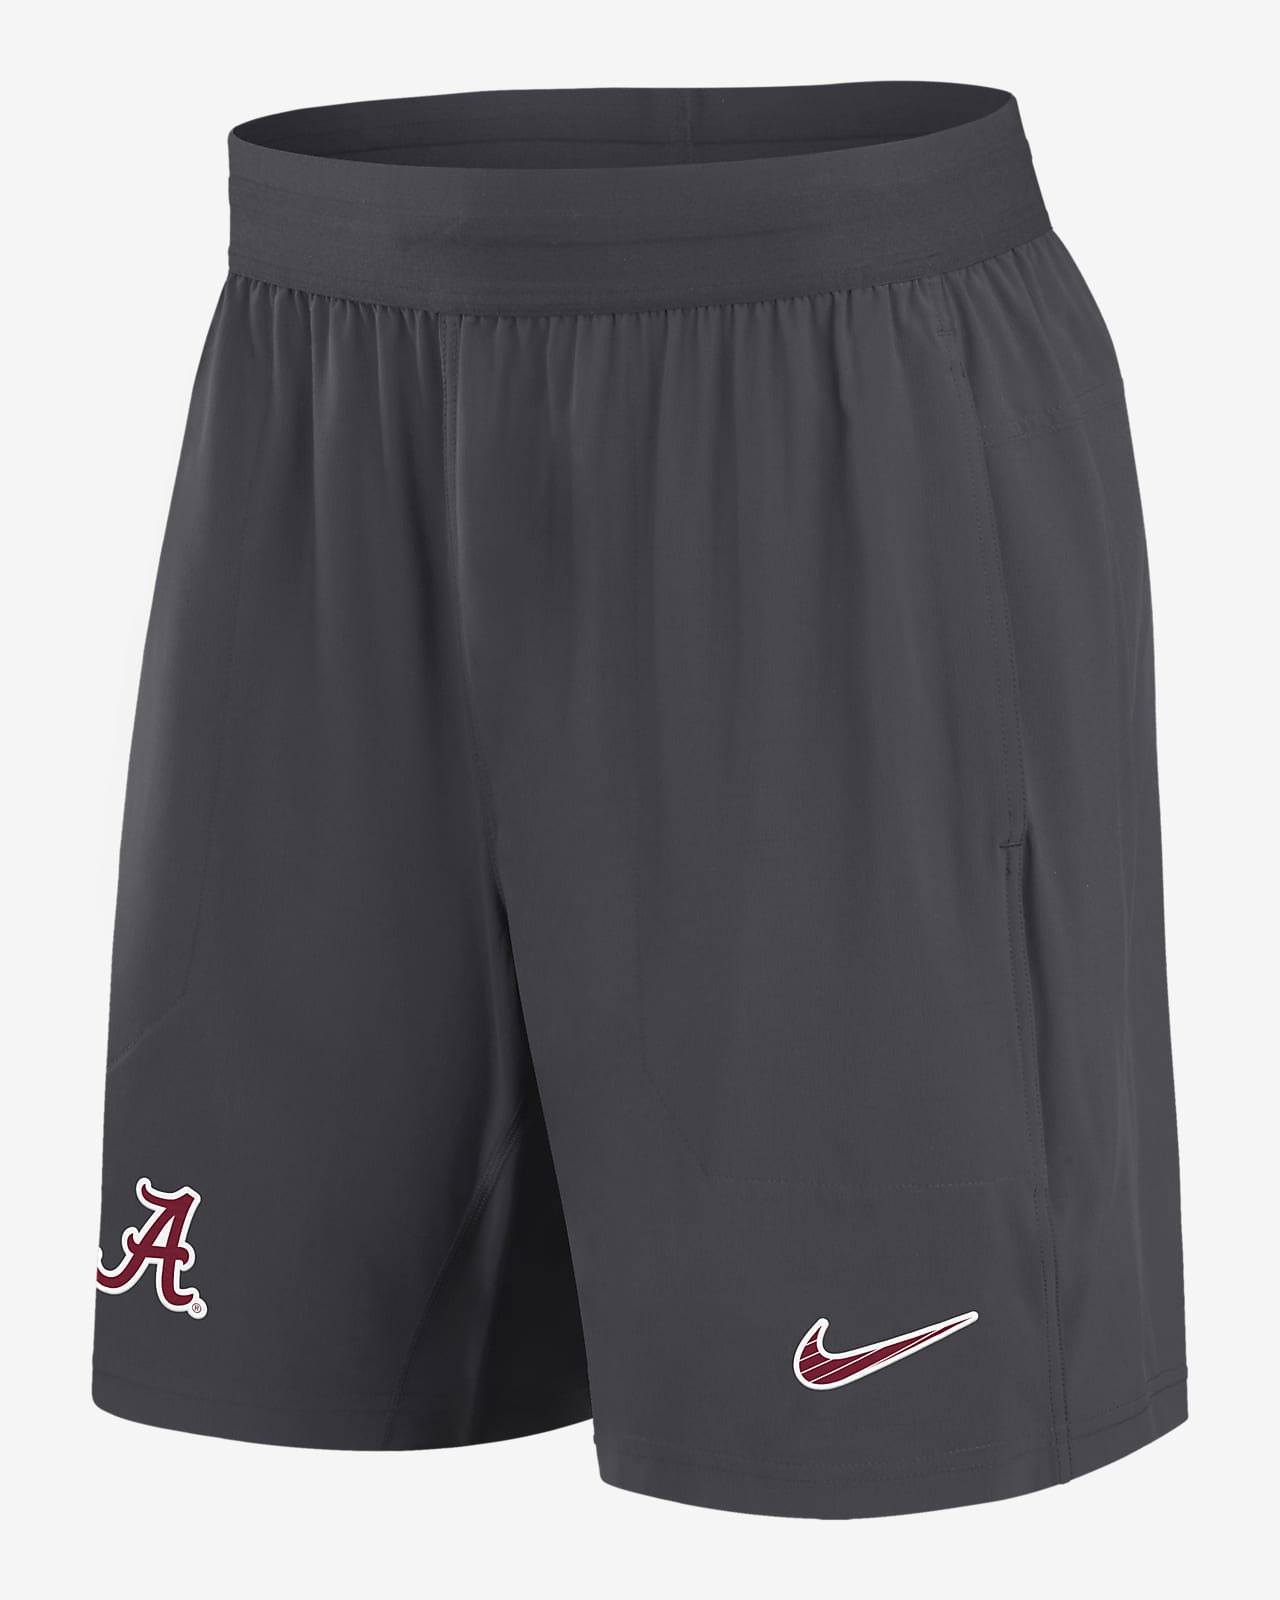 Shorts universitarios Nike Dri-FIT para hombre Alabama Crimson Tide Sideline